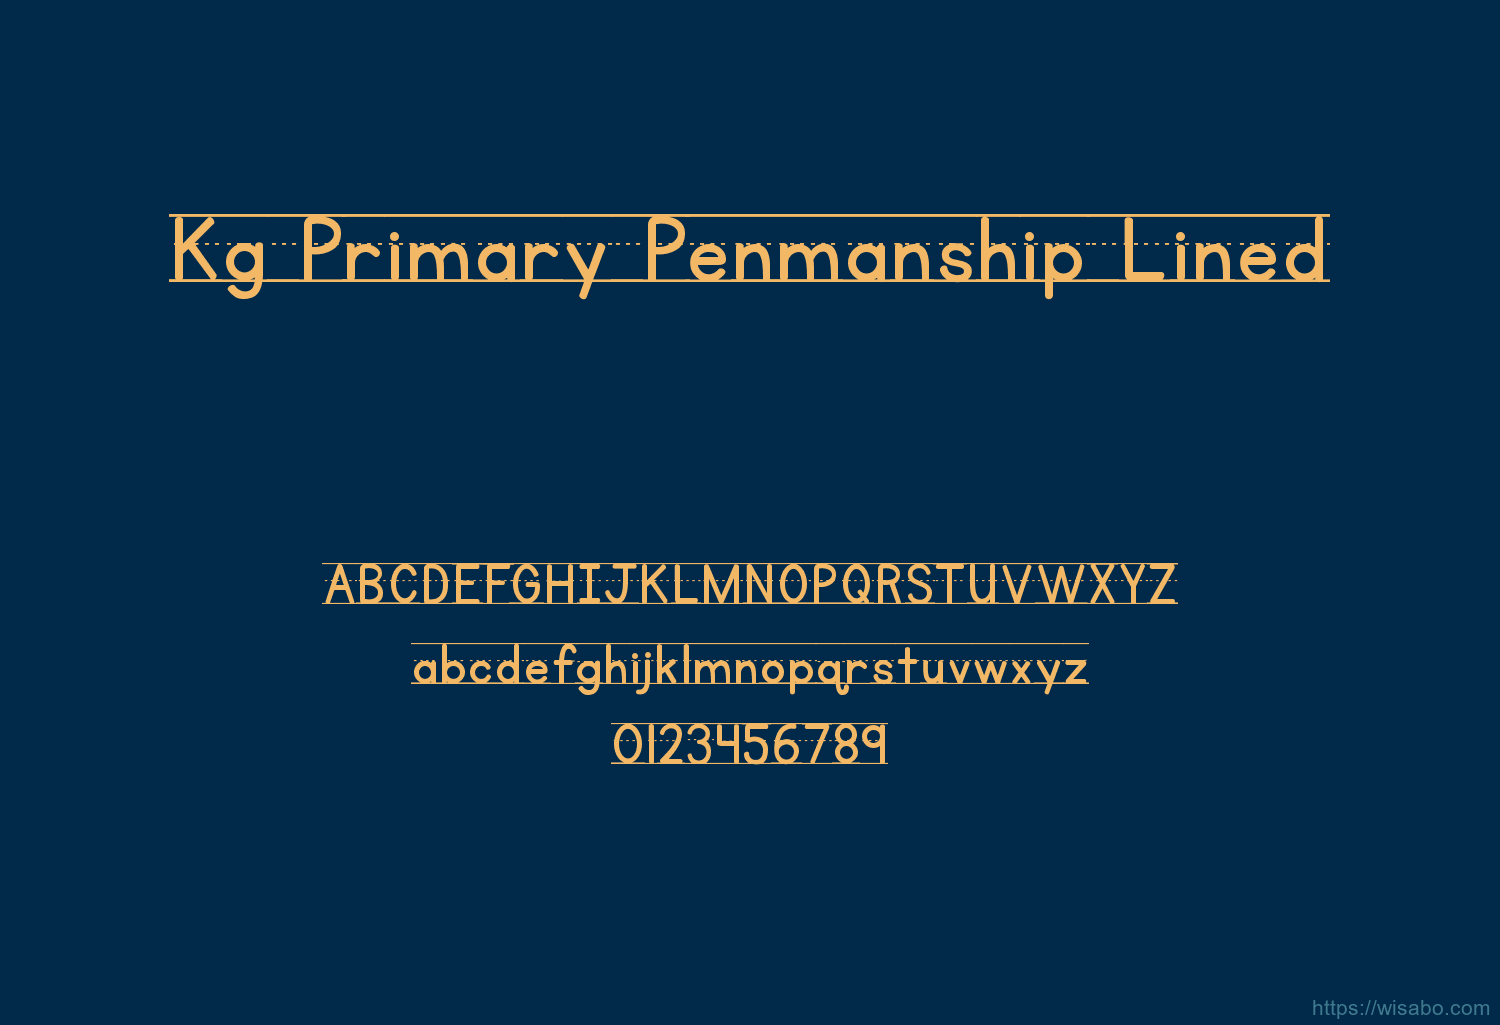 Kg Primary Penmanship Lined